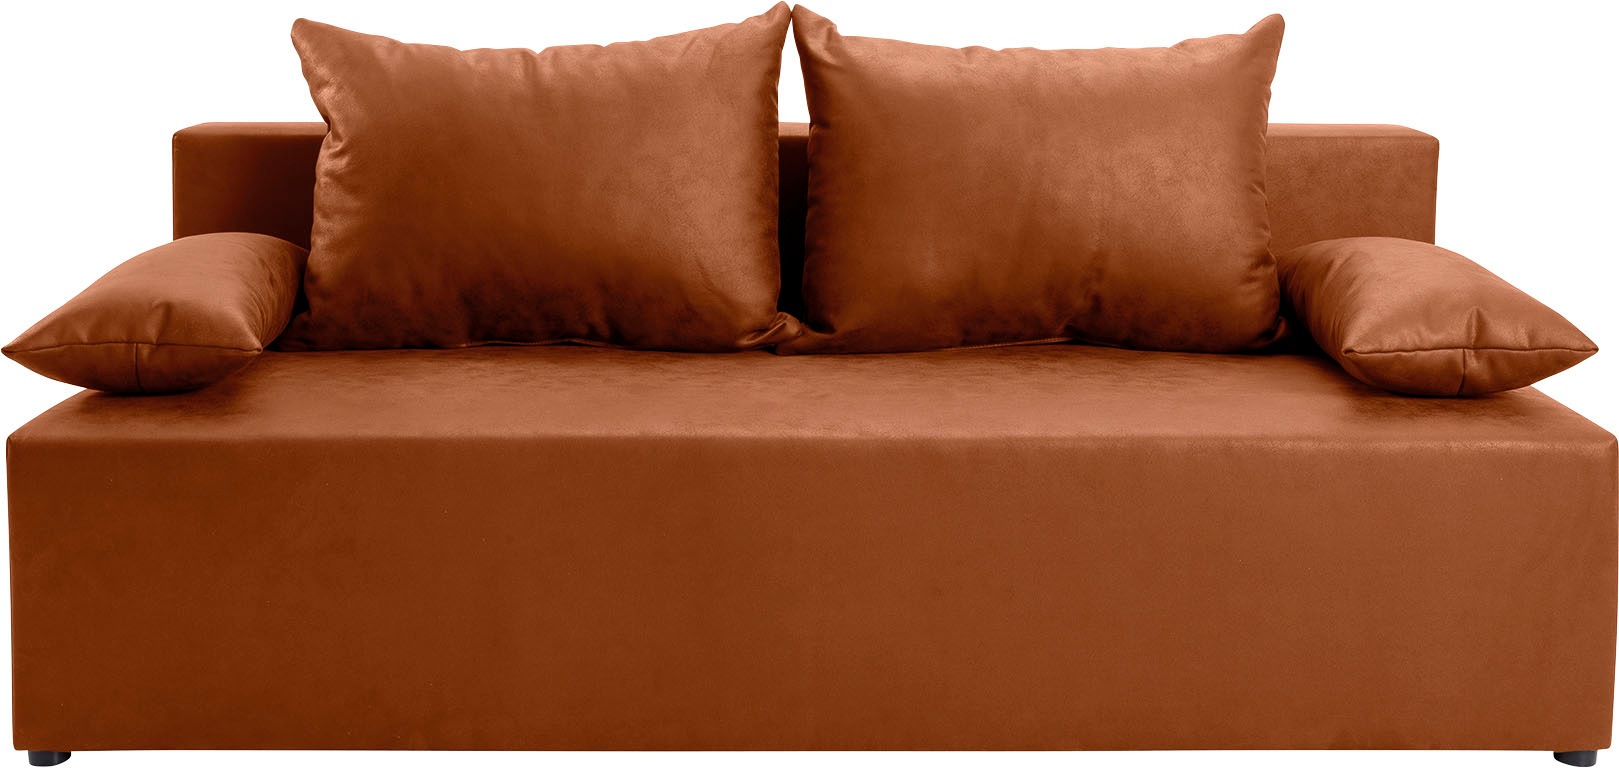 exxpo - sofa fashion Schlafsofa »Exxpo Tabou«, Bettfunktion,Bettkasten, wahlweise mit Liftbettfunktion und Federkern